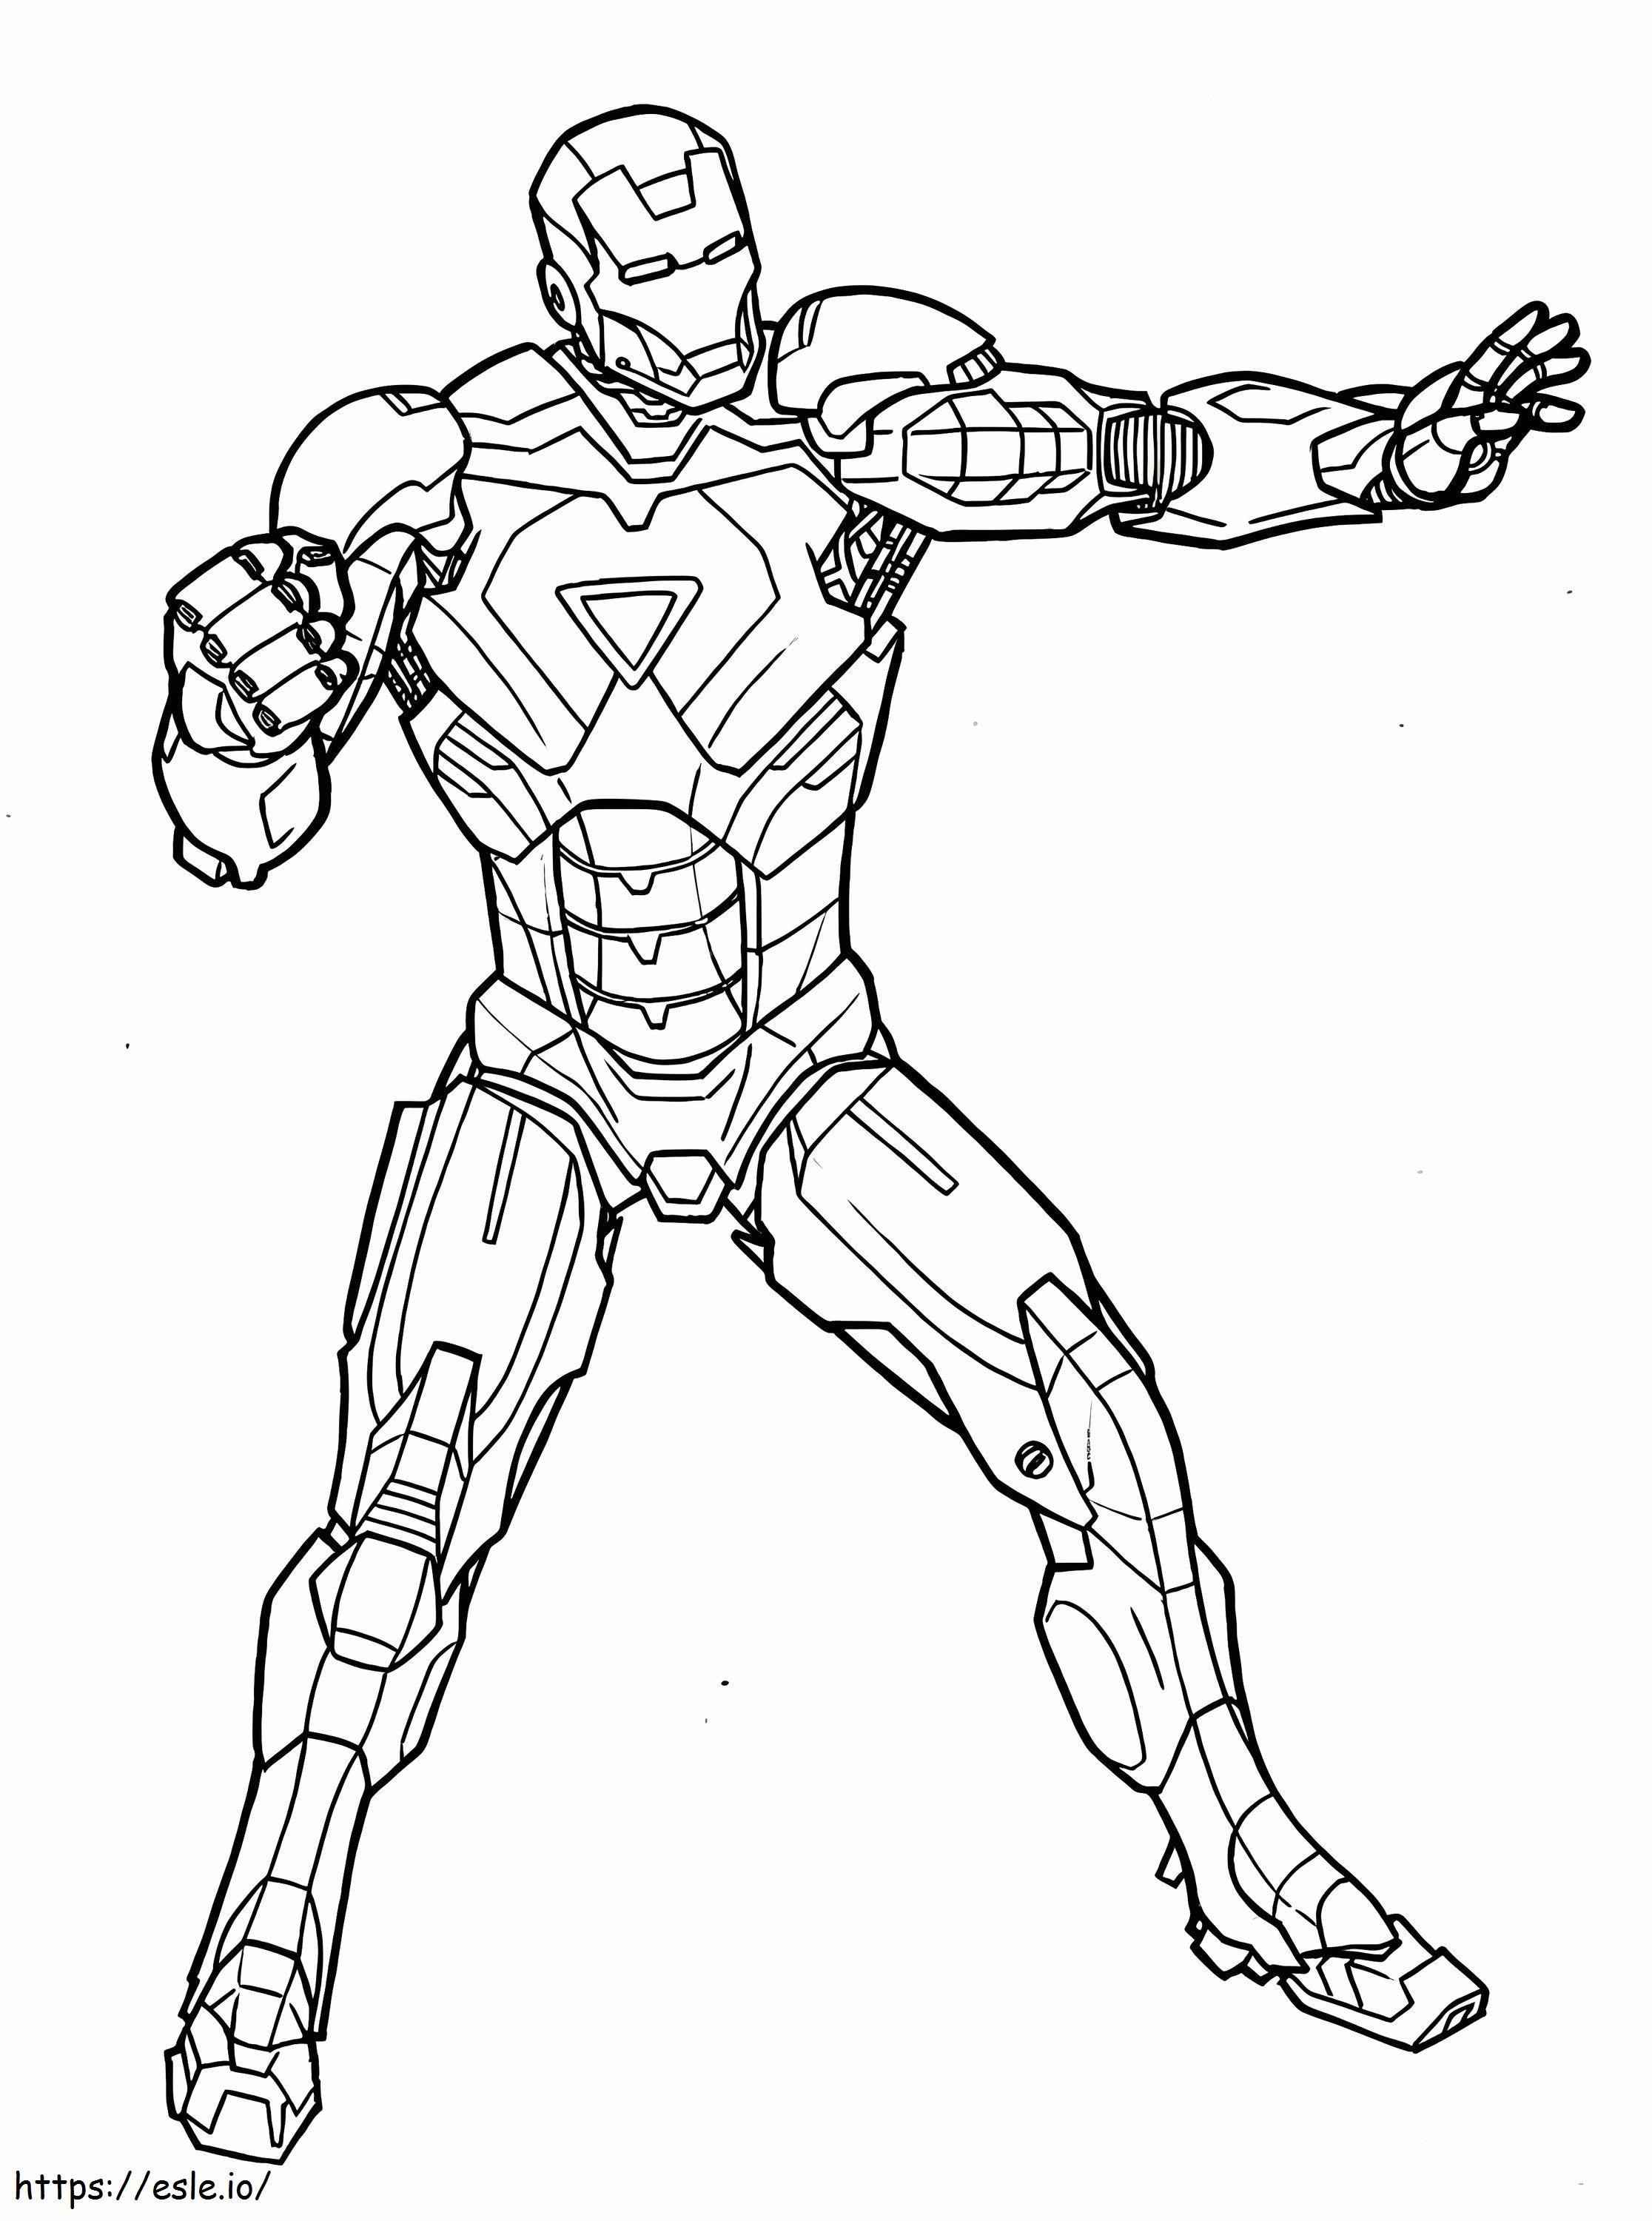 Cooler Iron Man ausmalbilder